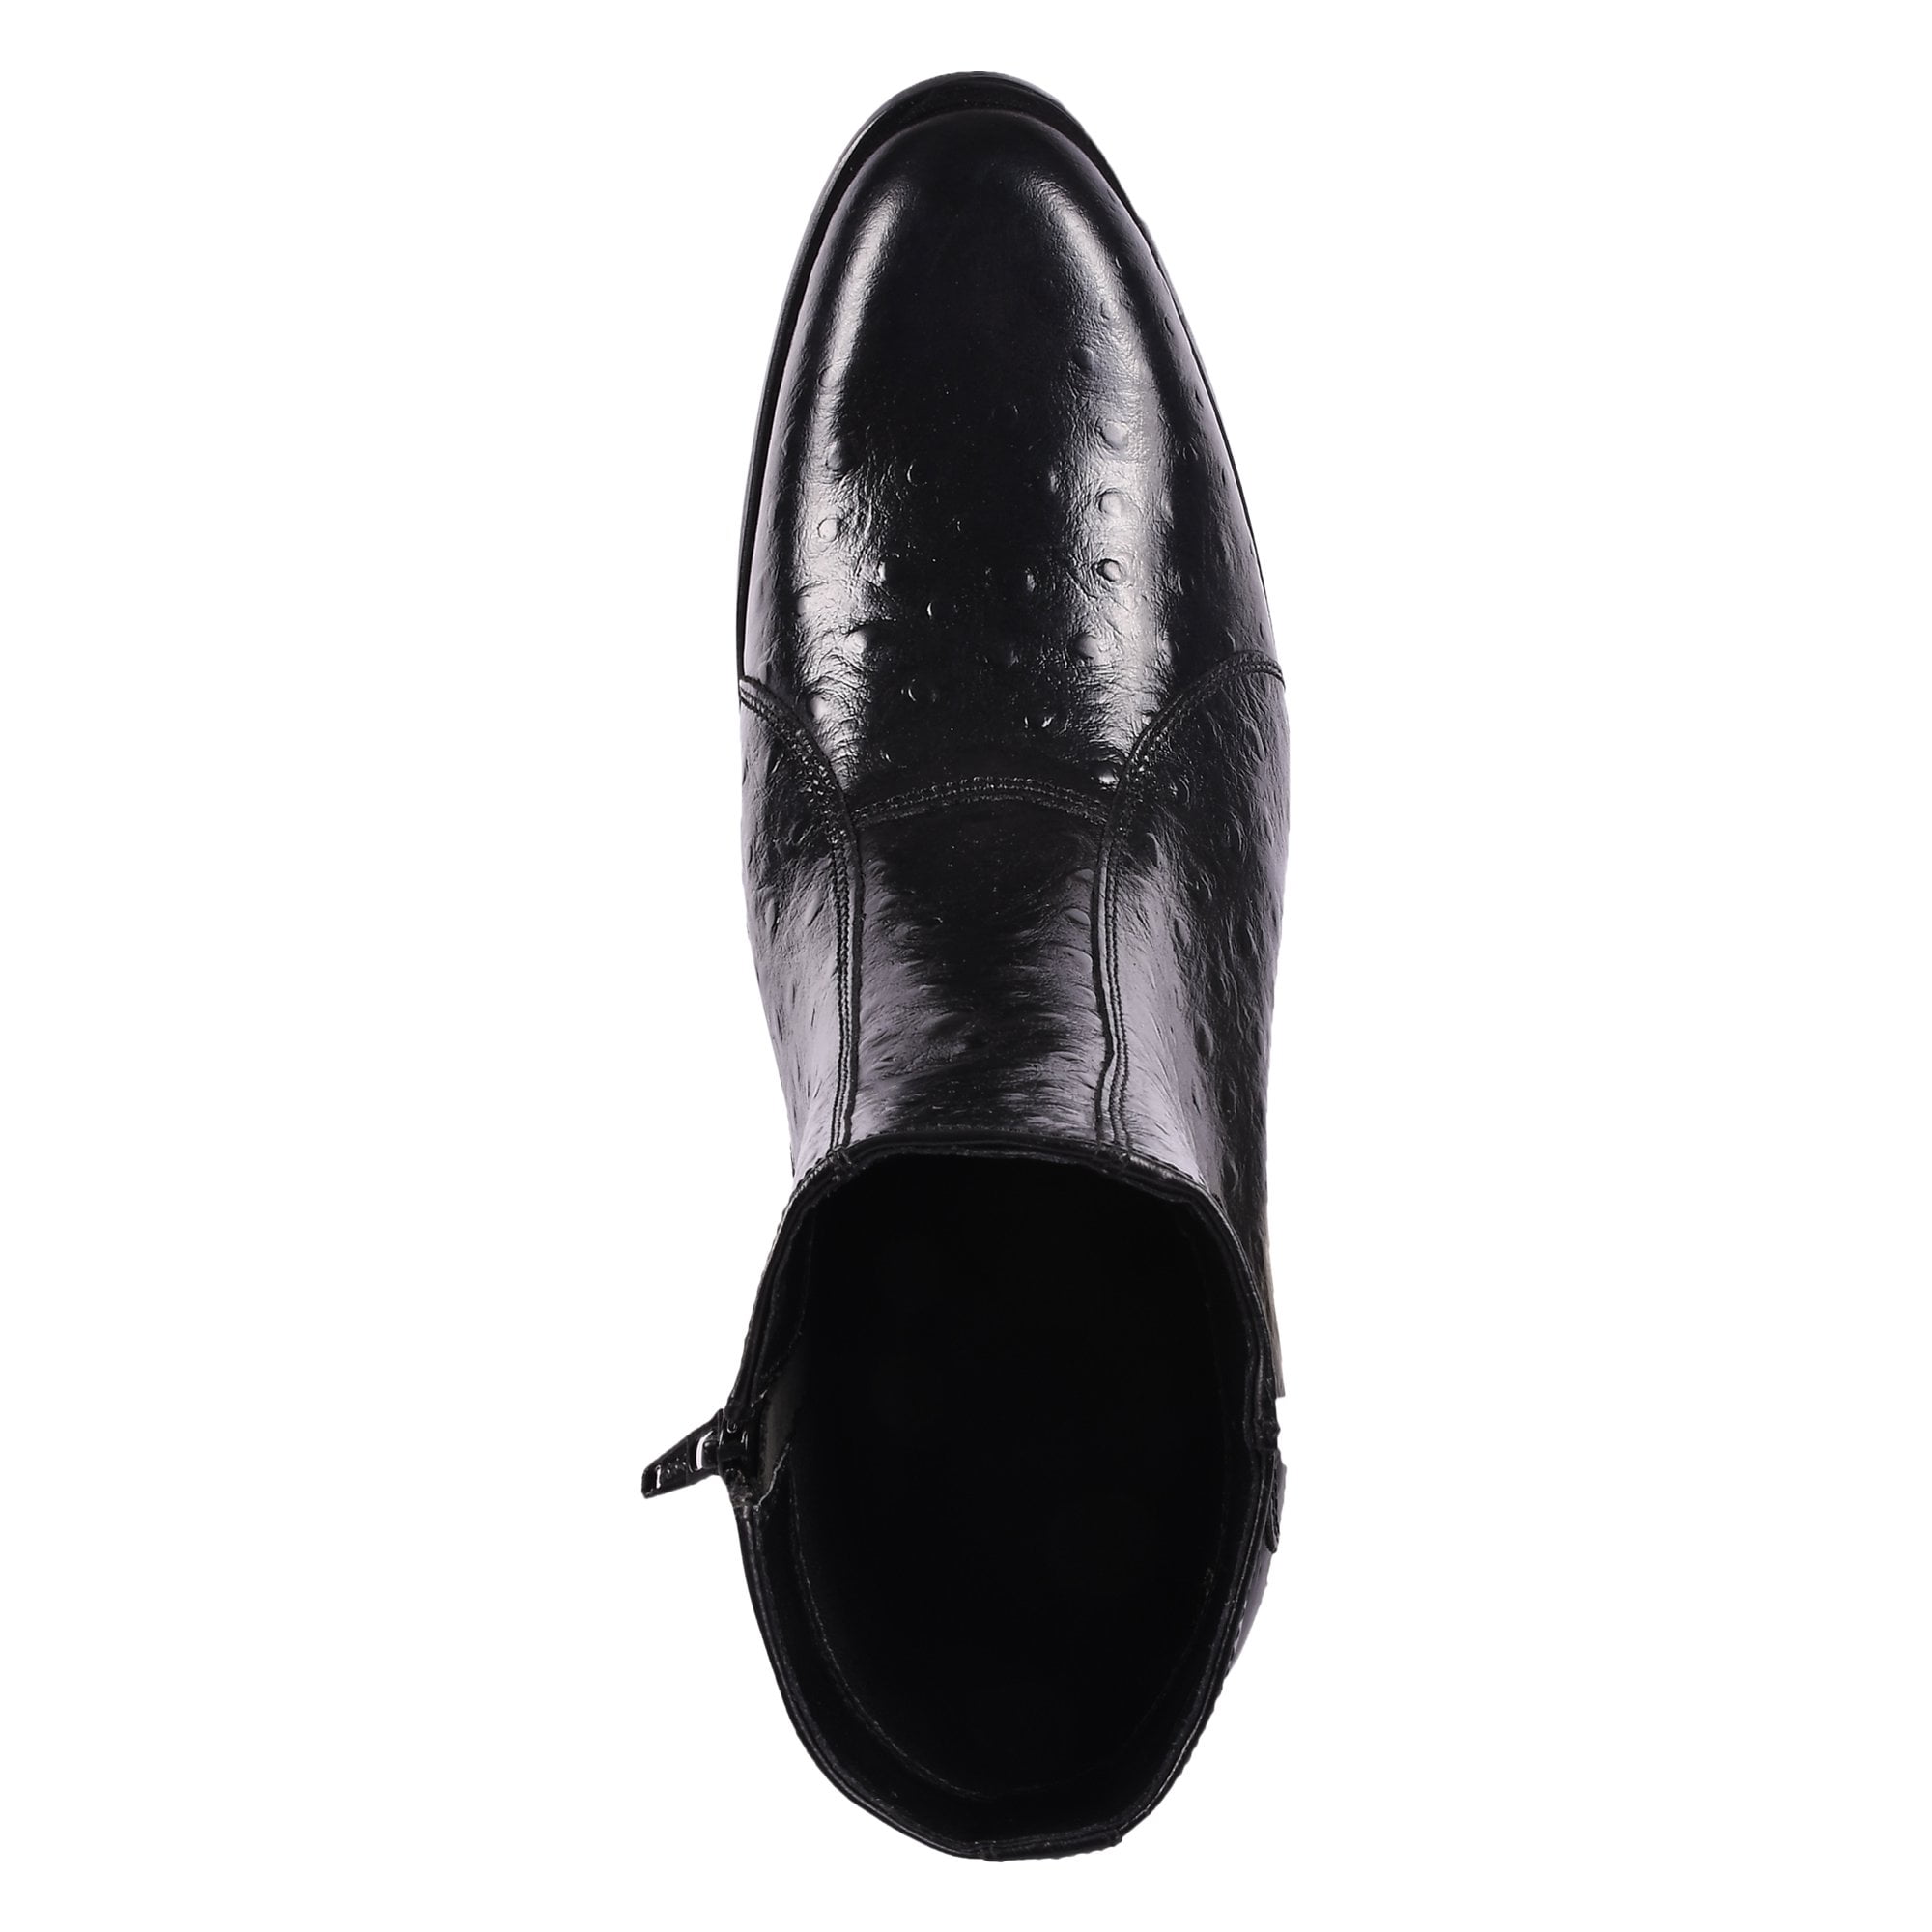 Club Cubano PABLO Mens Patent Leather Cuban Heel Shoes Comfortable Slip-On  Black | eBay